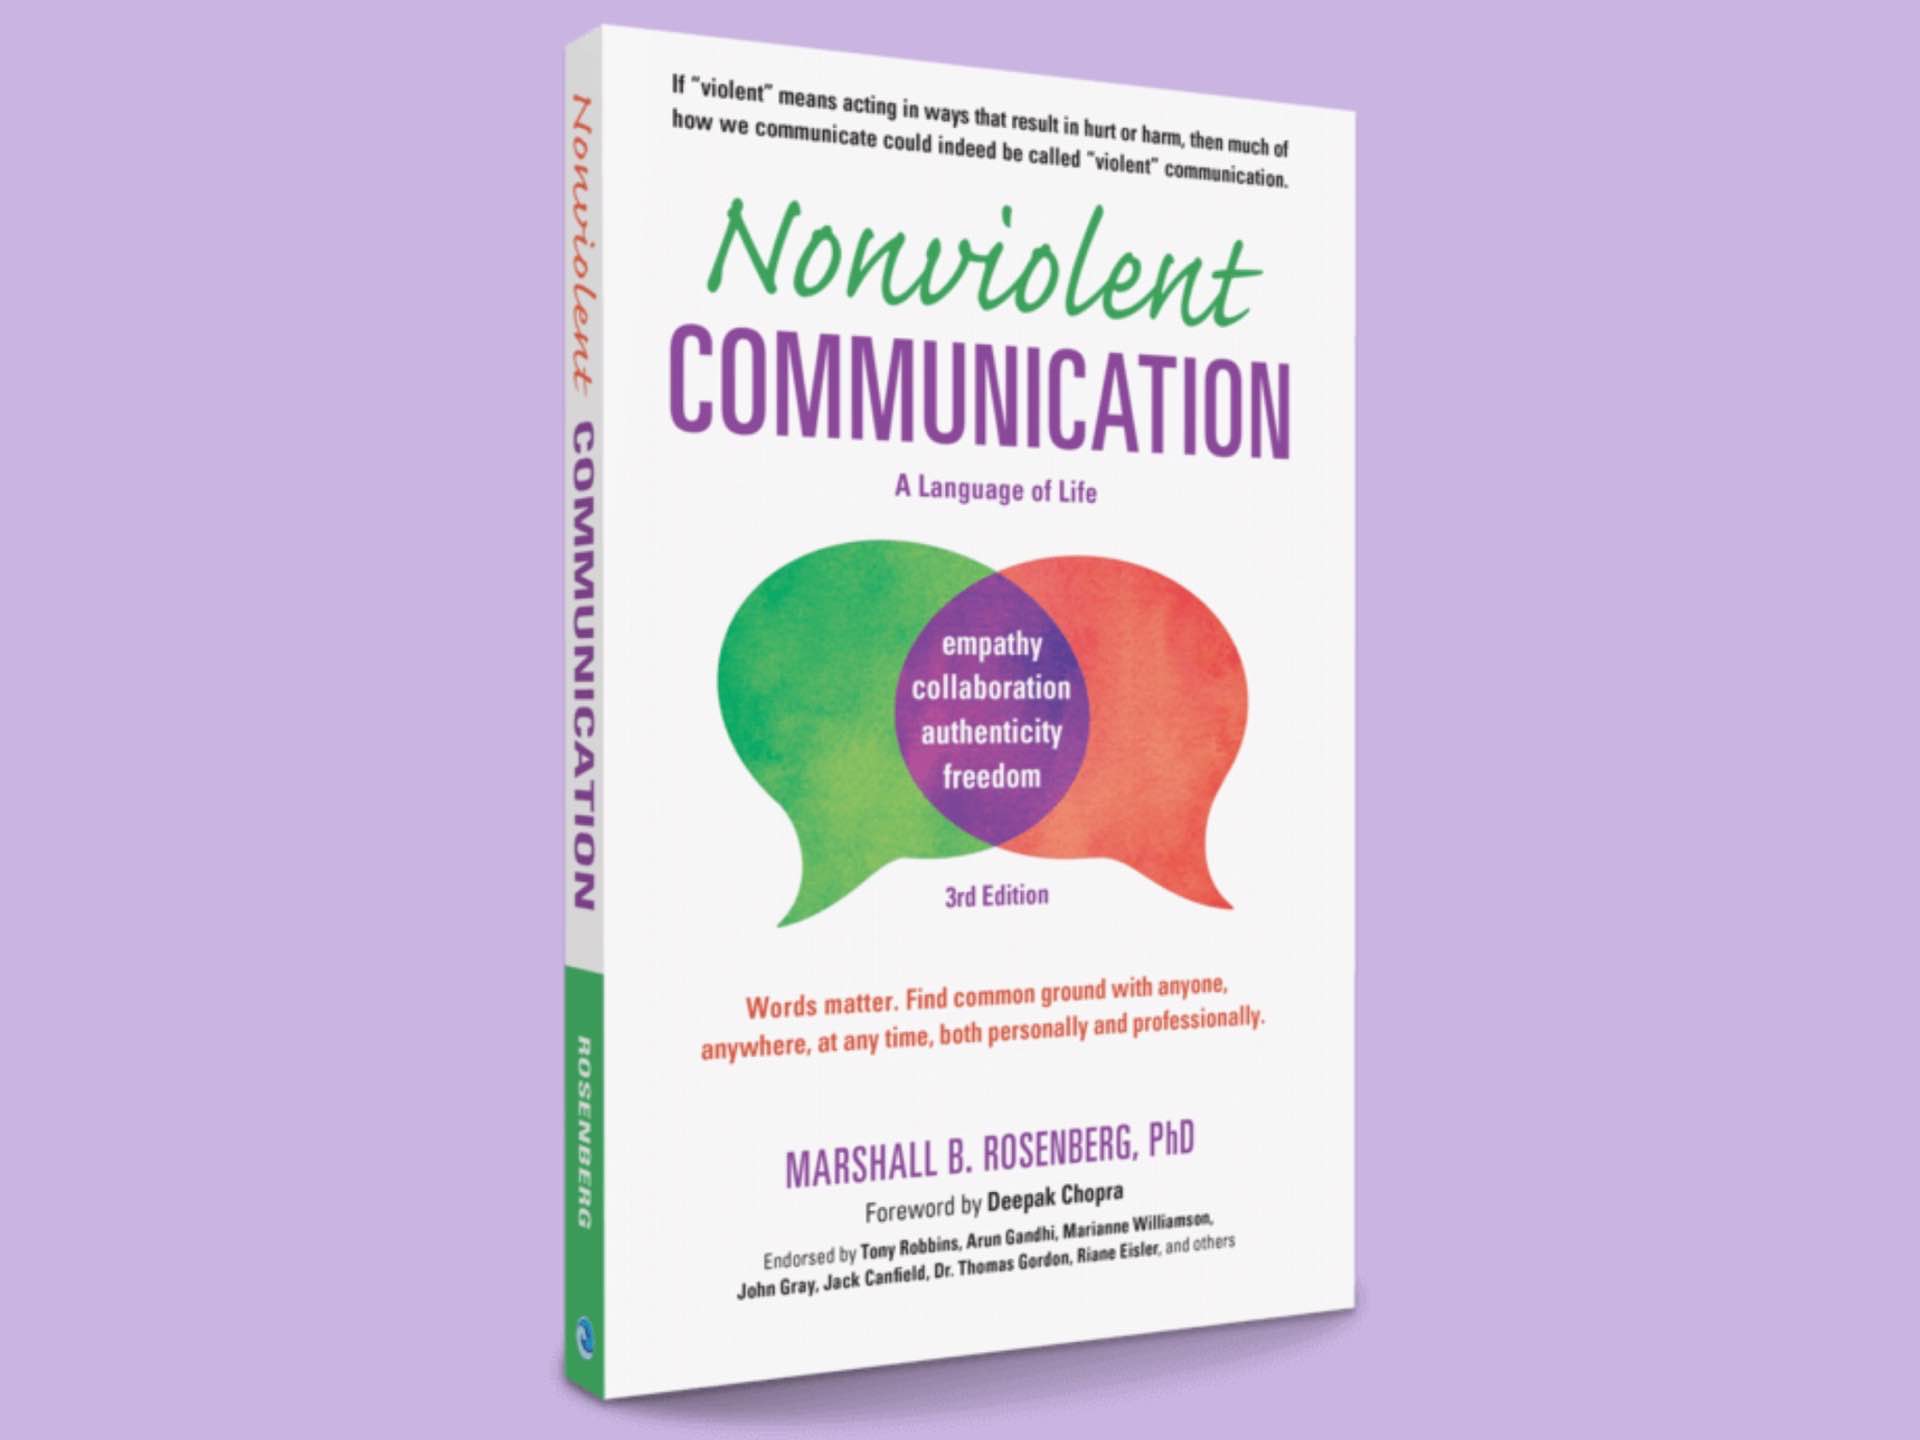 nonviolent-communication-3rd-edition-by-marshall-b-rosenberg-phd